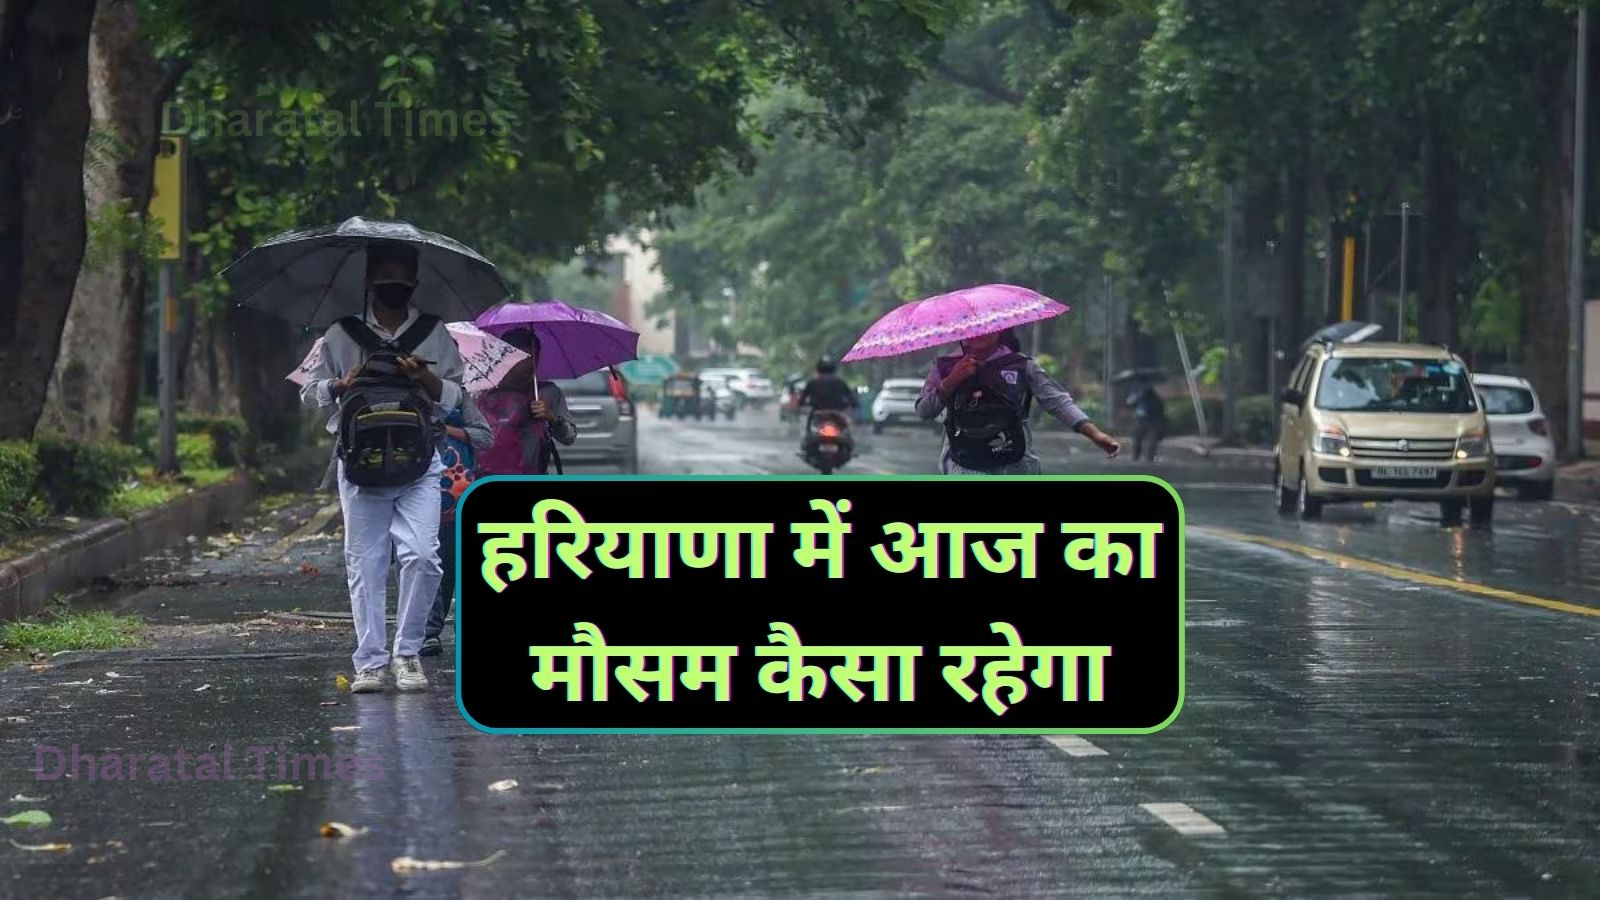 Haryana Rajasthan Weather Today